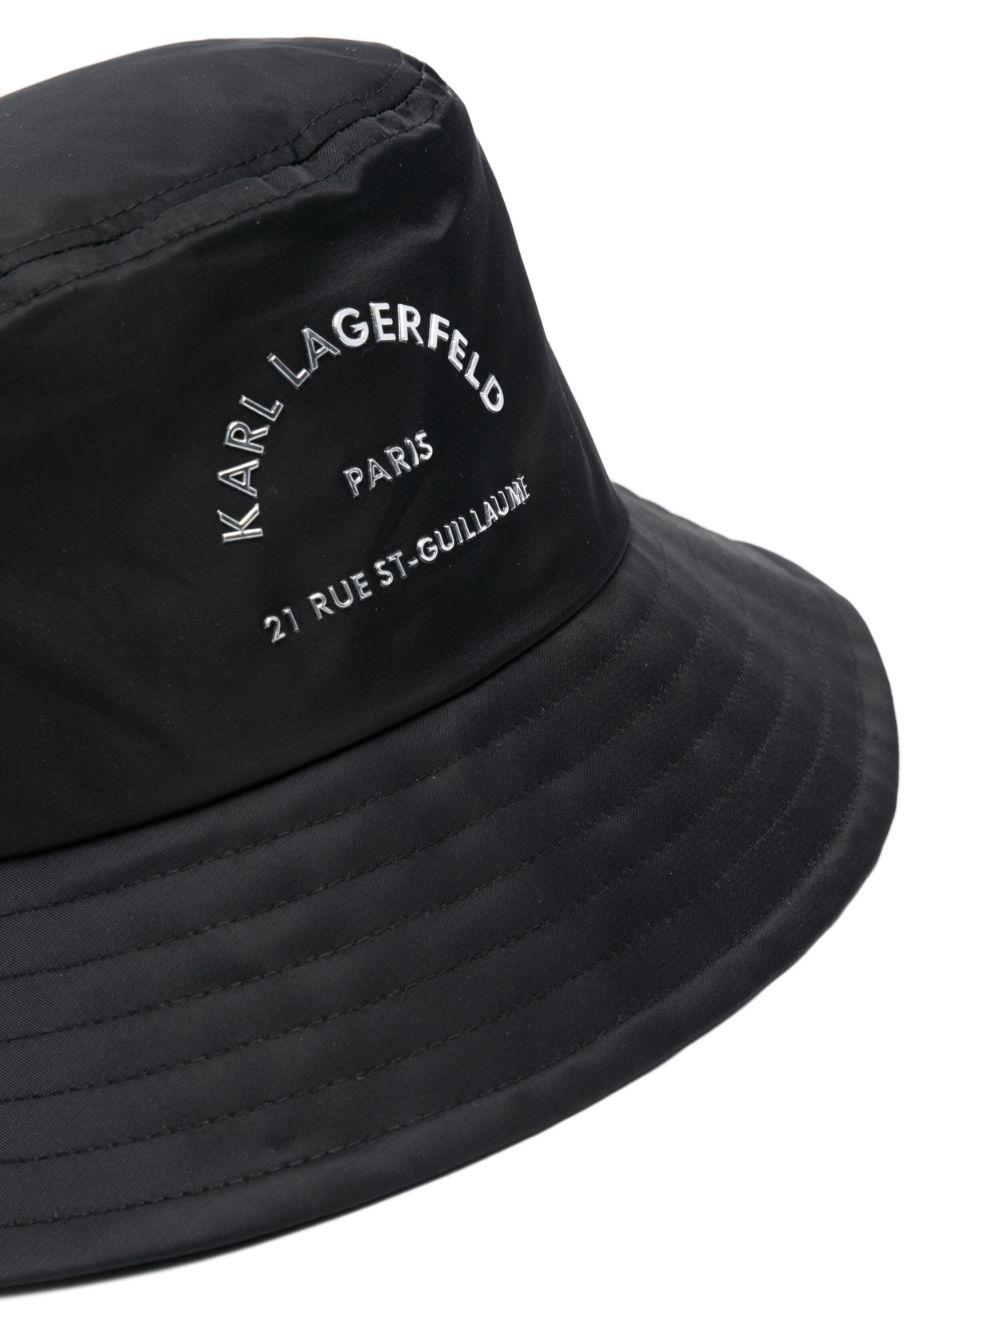 Gorro Karl Lagerlfeld negra RSG nylon bucket hat